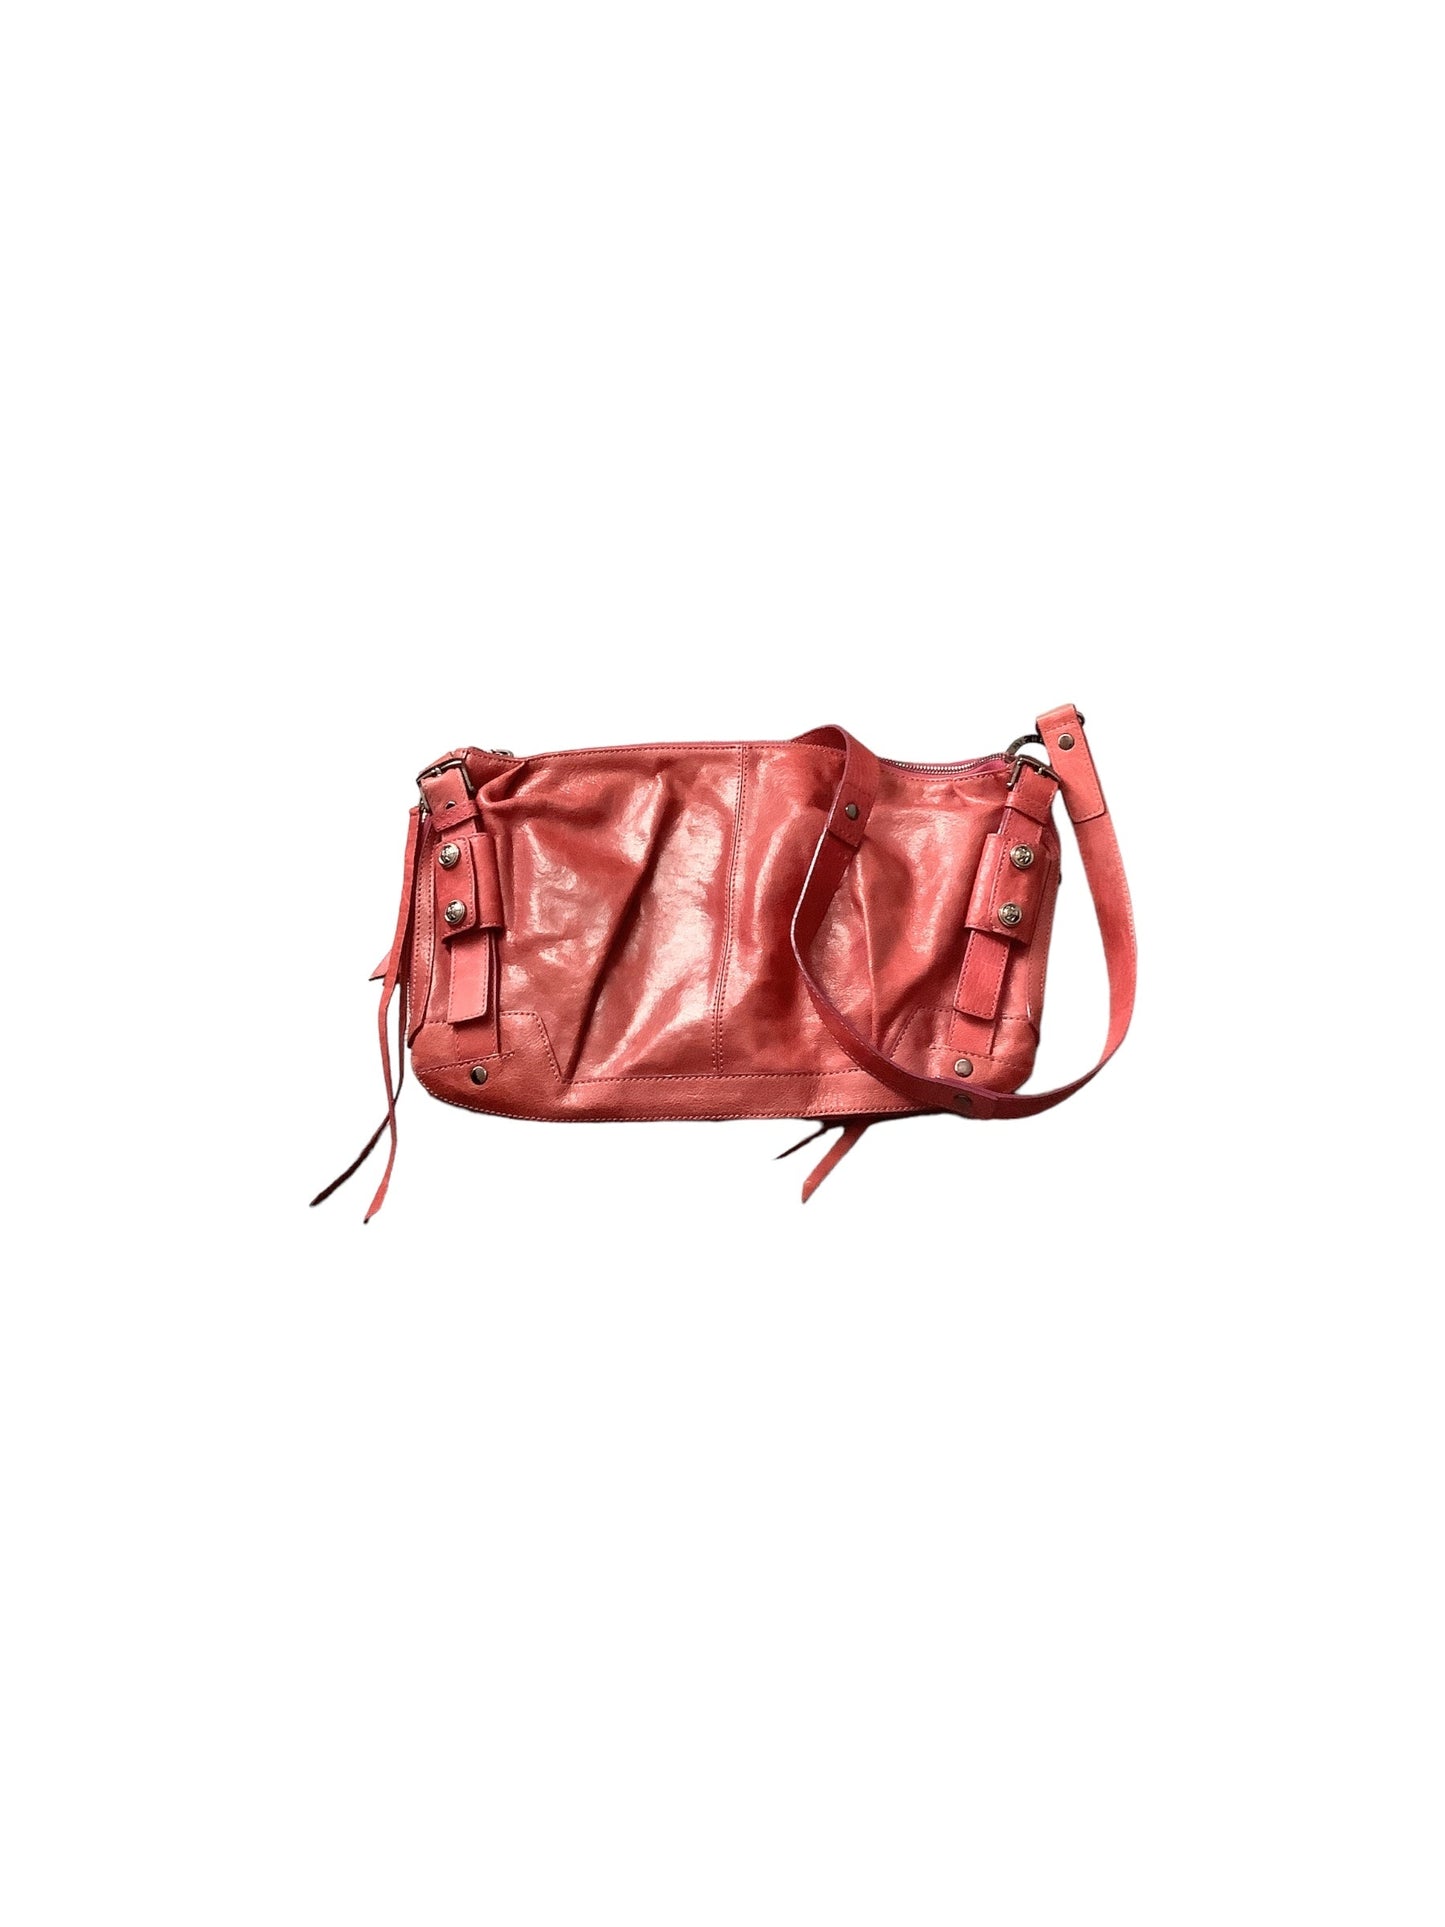 Handbag Leather Michele, Size Medium